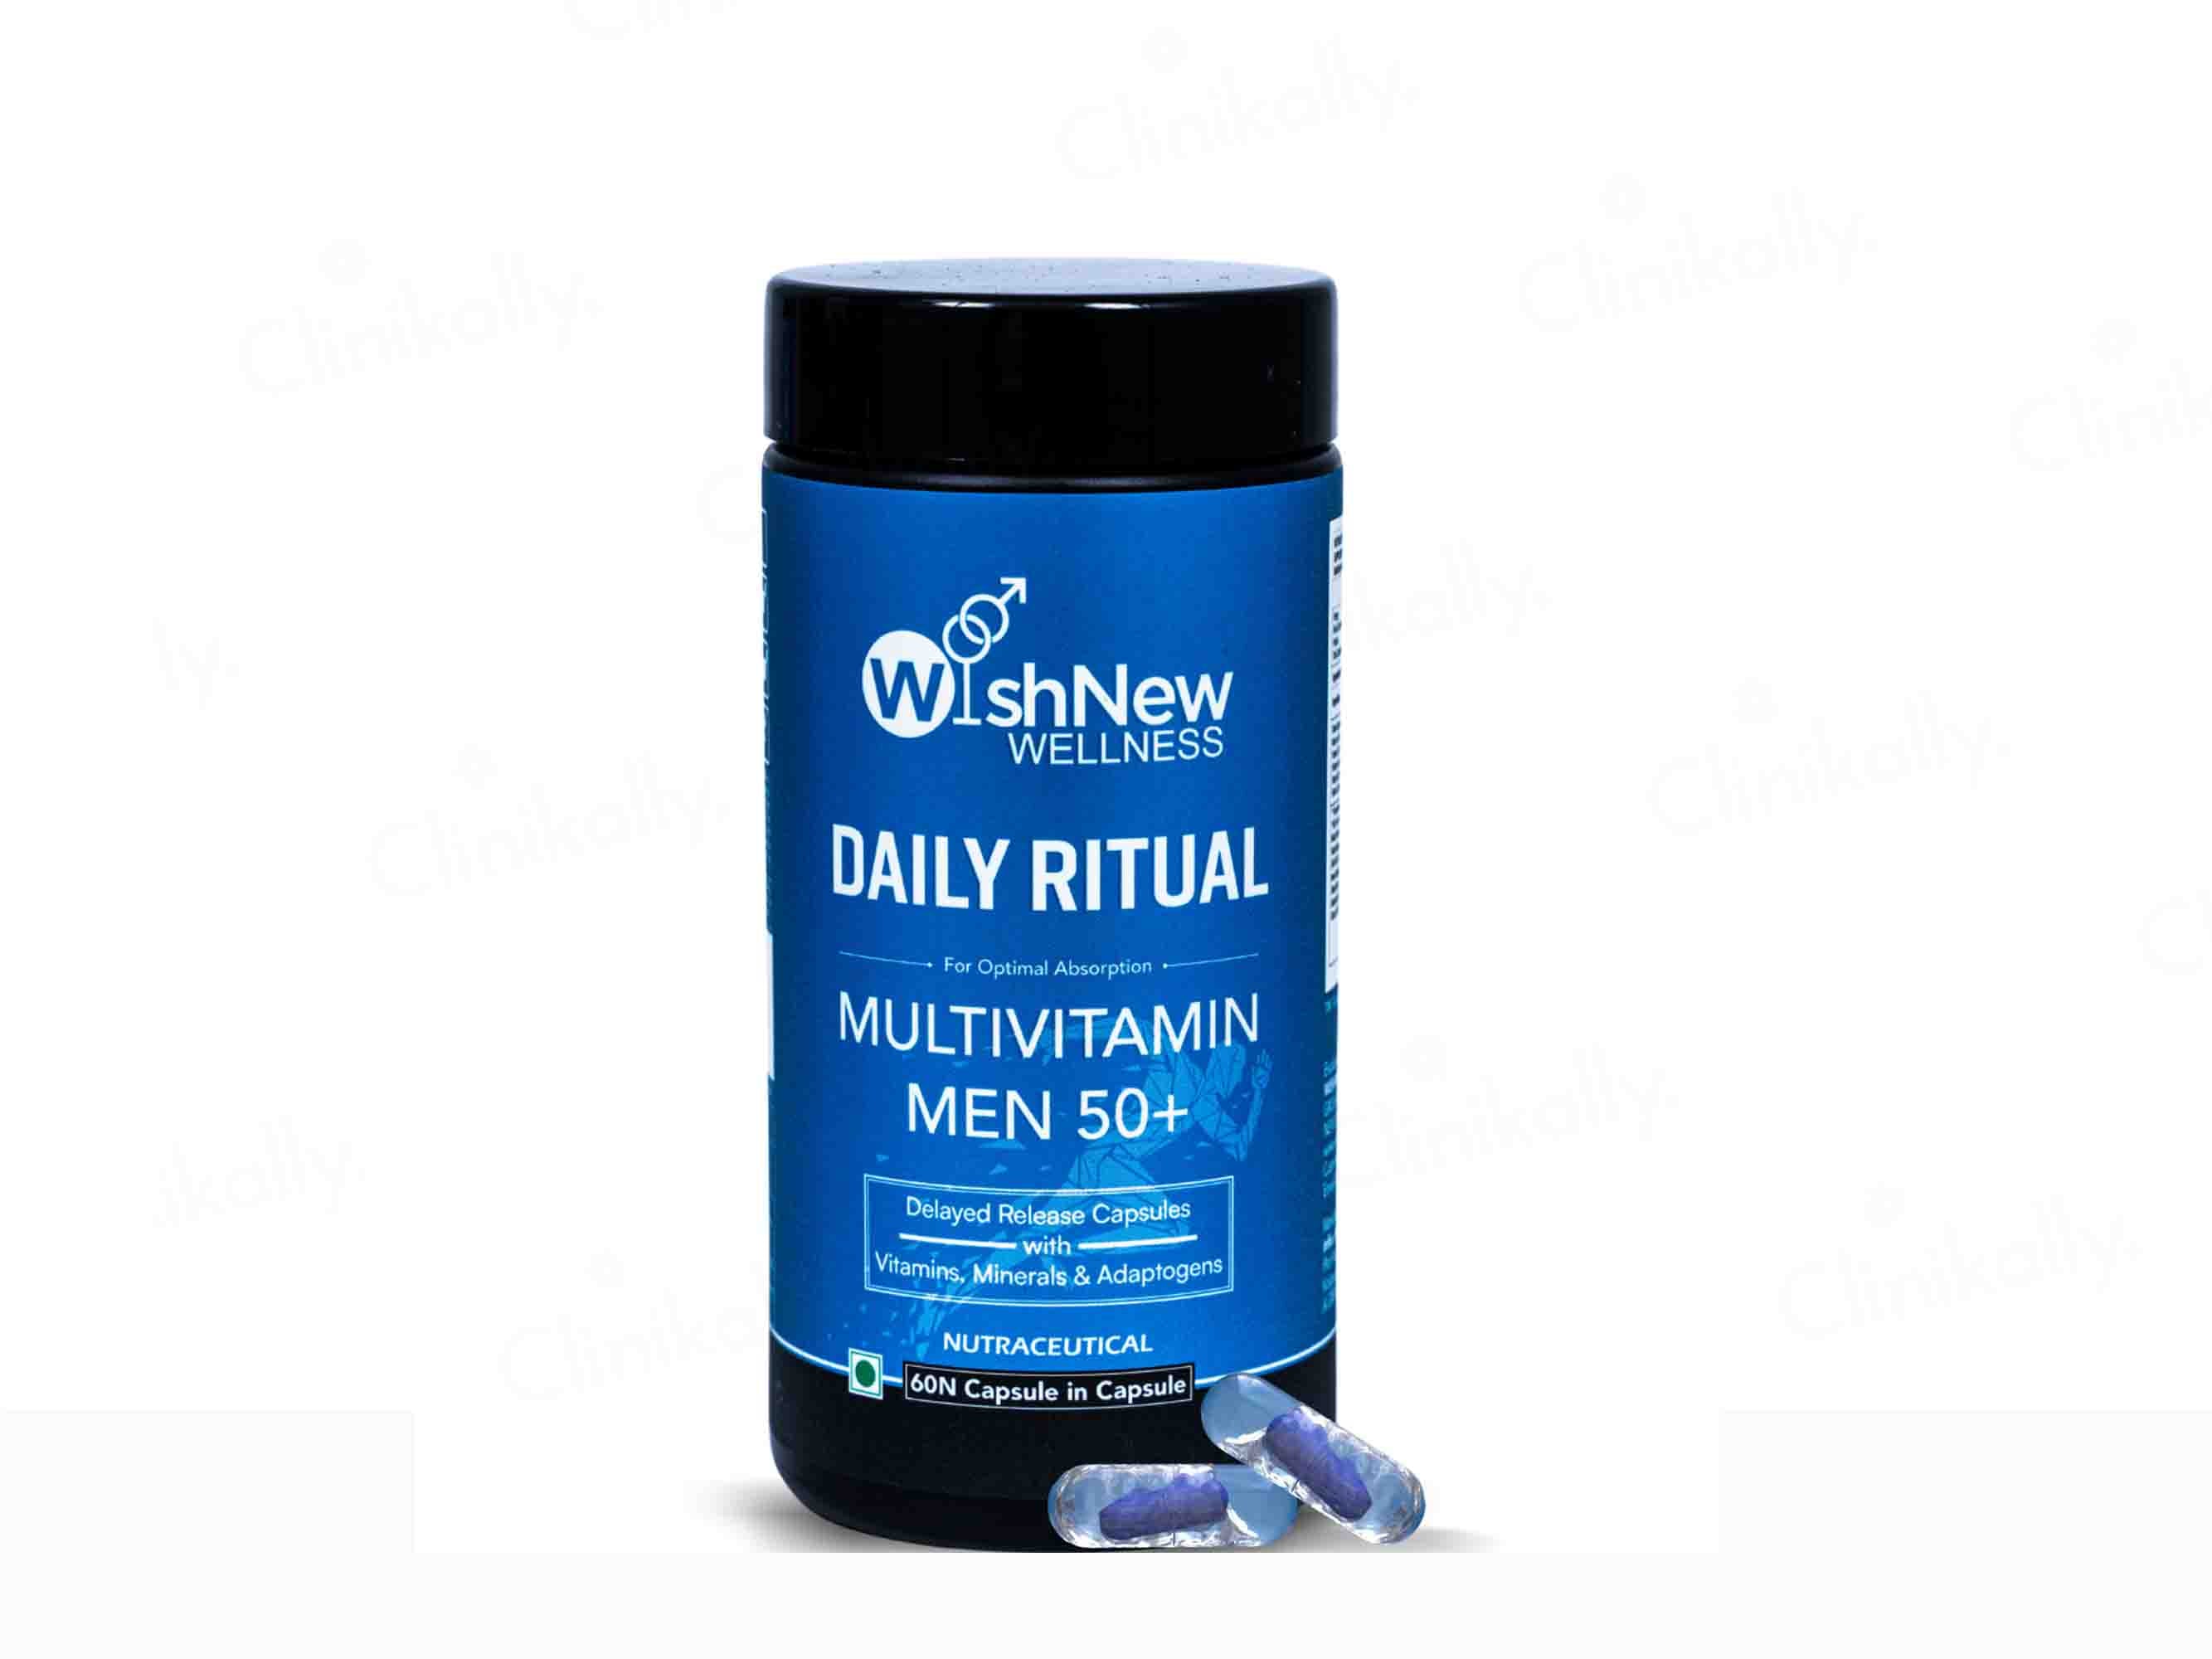 WishNew Wellness Daily Ritual Multivitamin Capsule For Men 50+